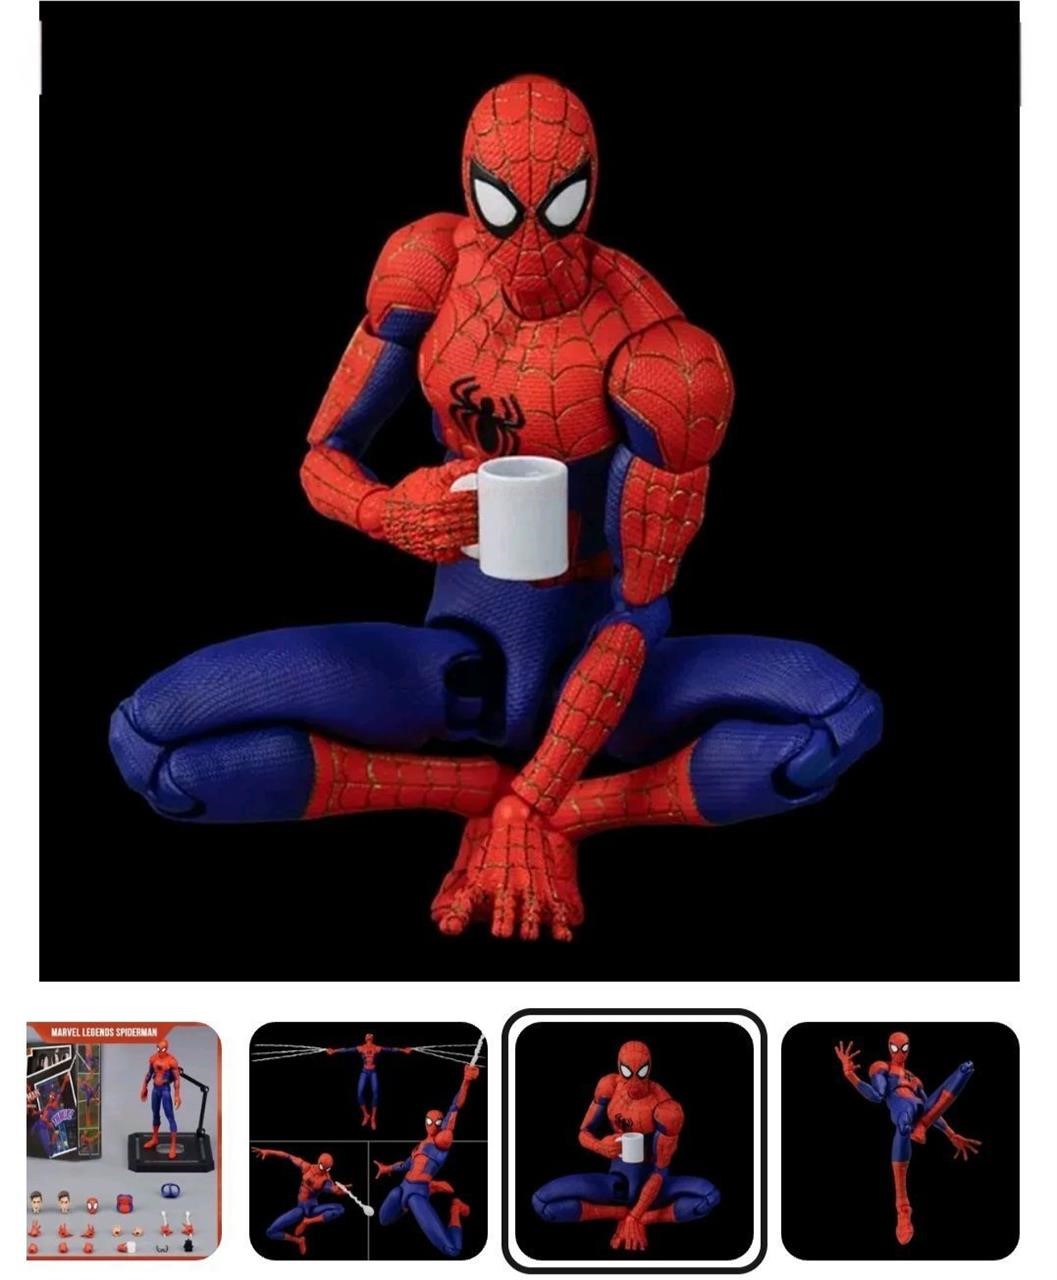 Spider-Man Action Figure Into The Spider Verse